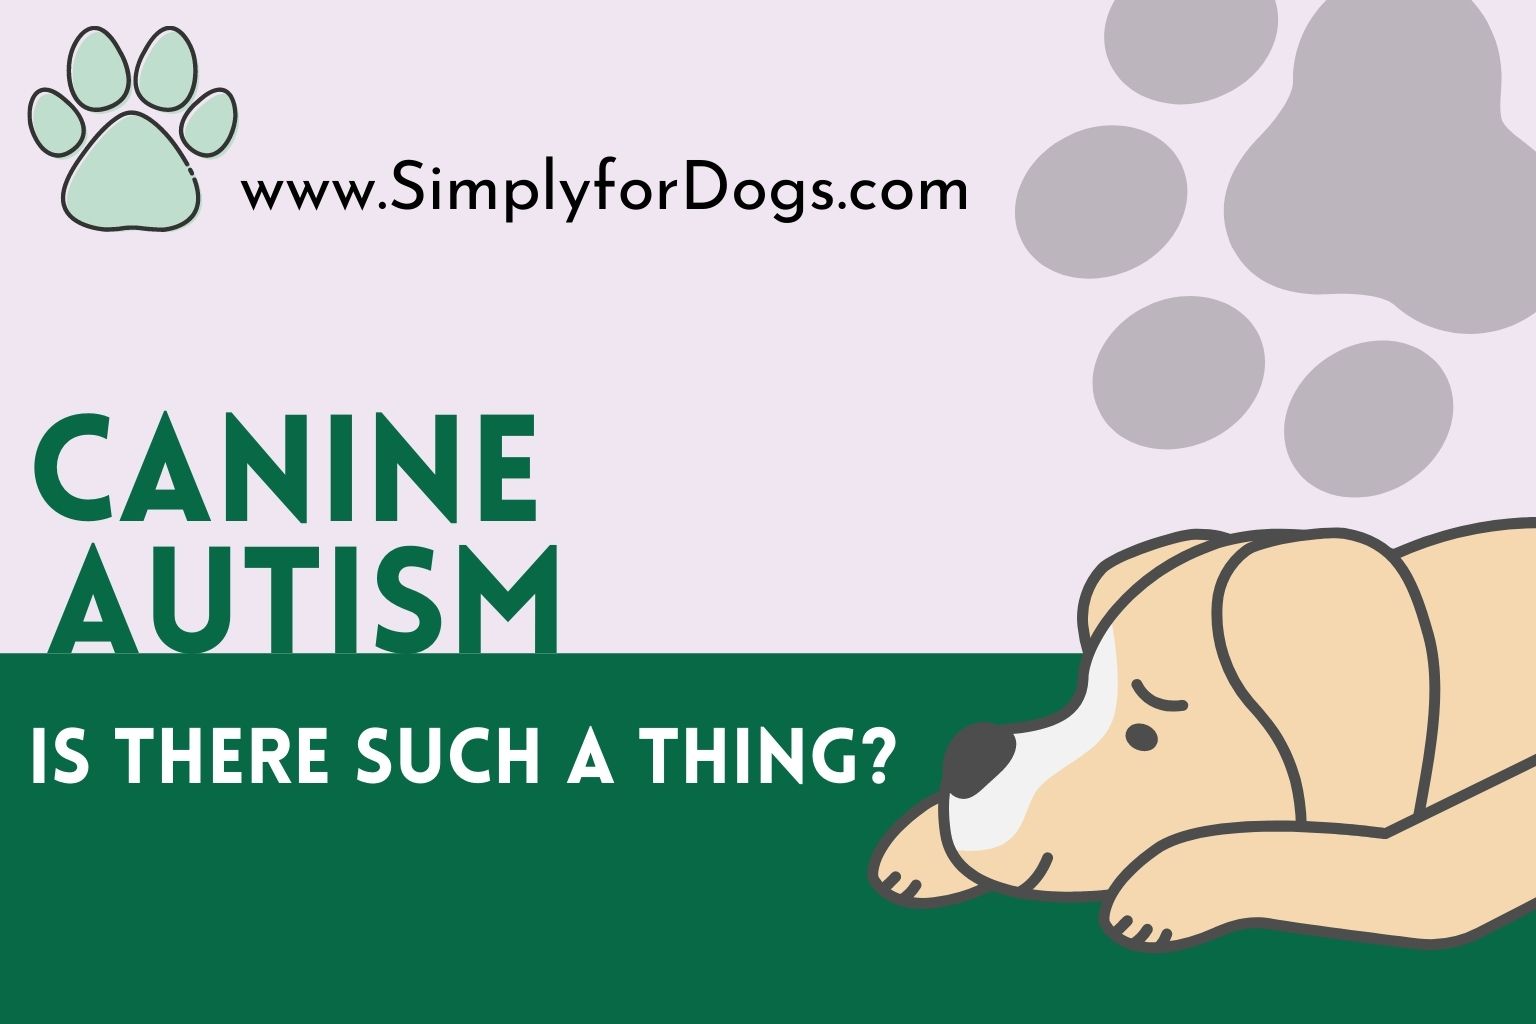 Canine Autism